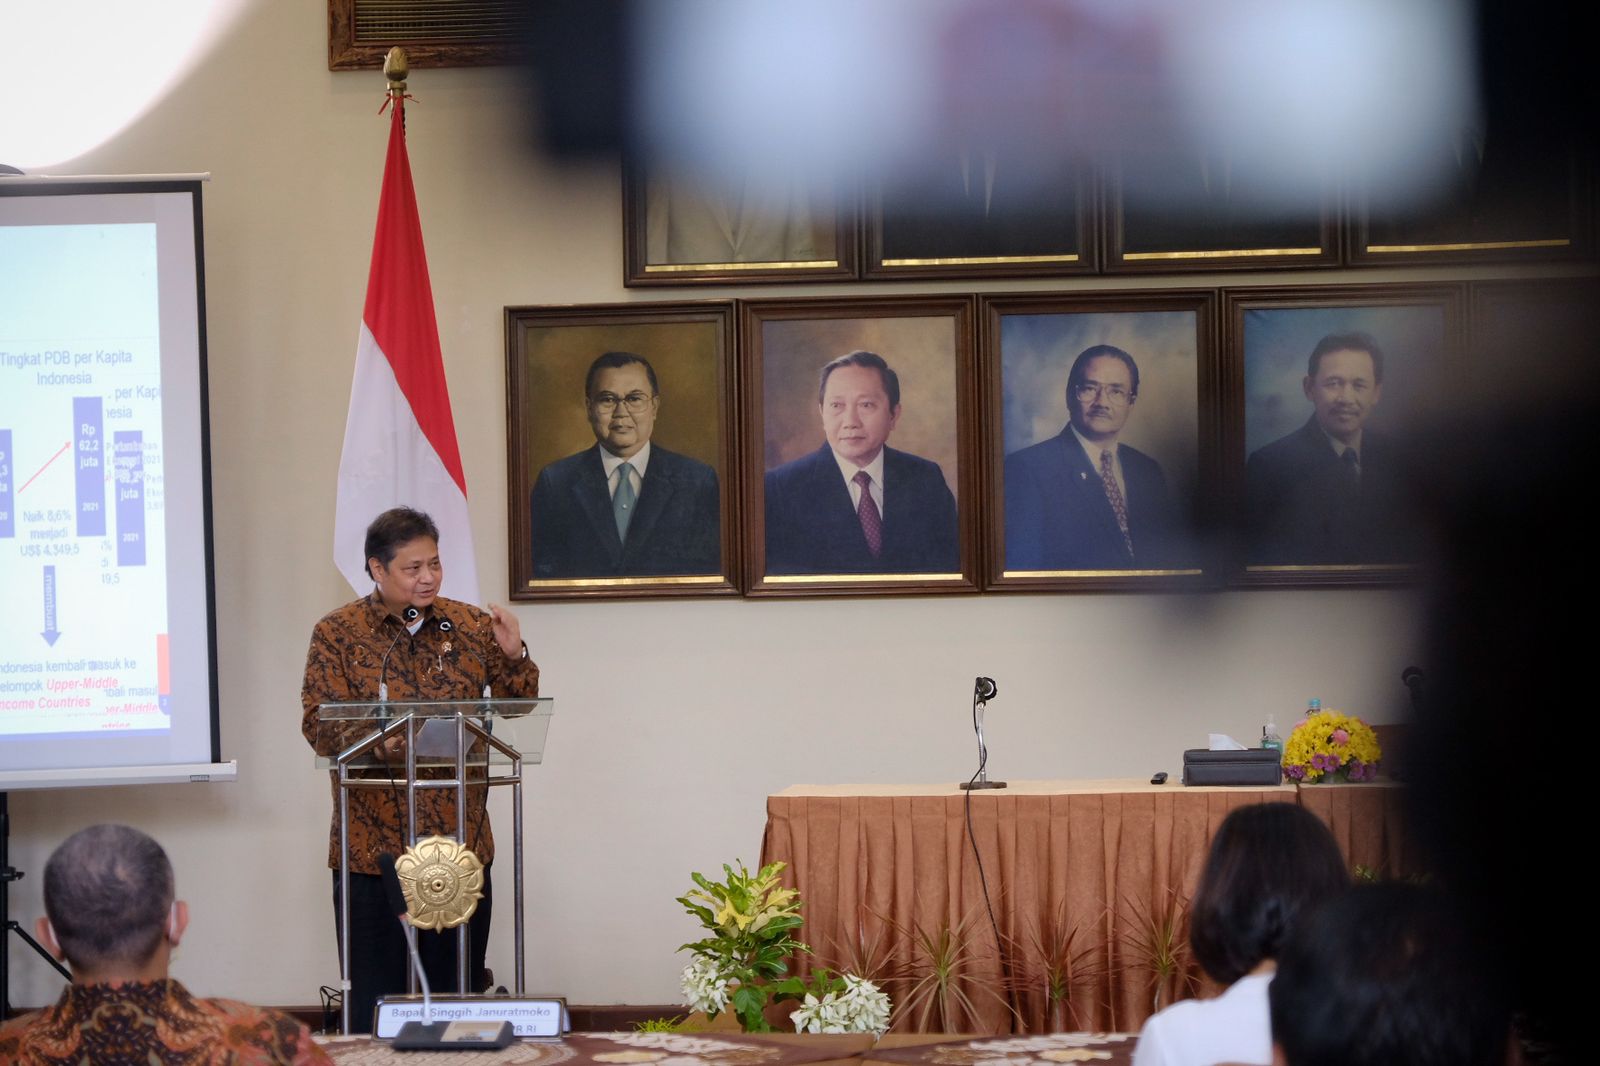 Menko Airlangga Hartarto ajak perguruan tinggi dan mahasiswa terlibat aktif dalam Seminar Presidensi Indonesia G20 bertajuk Kepemimpinan Untuk Tata Dunia yang diselenggarkan oleh Universitas Gadjah Mada di Yogyakarta pada hari Kamis (17/3/2022)